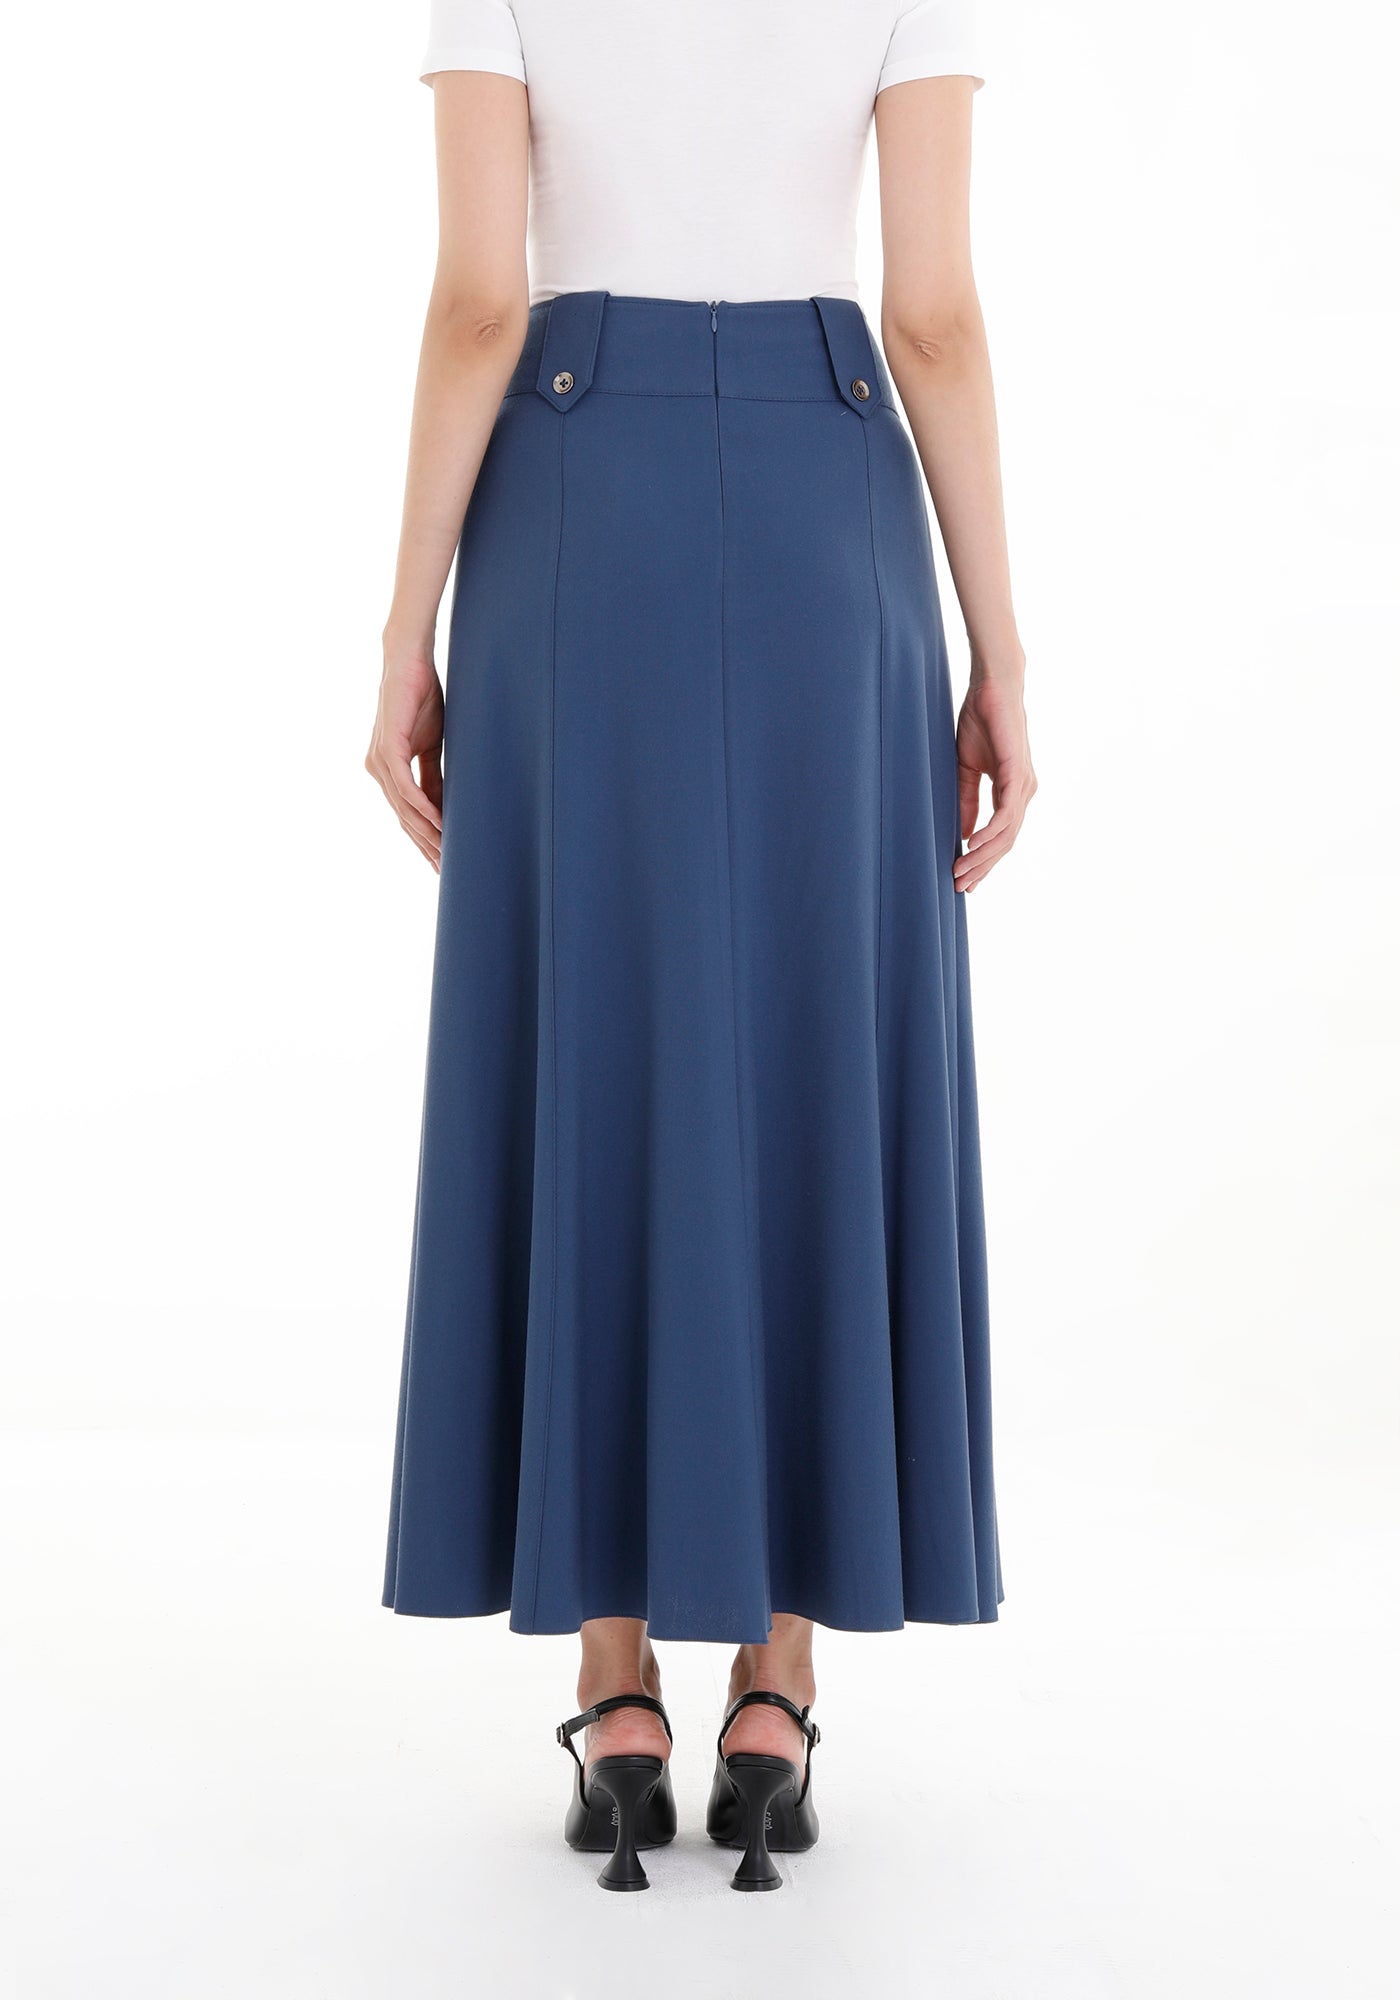 Indigo Flared Maxi Skirt with Unique Gores | Comfortable and Stylish ürününün kopyası G-Line